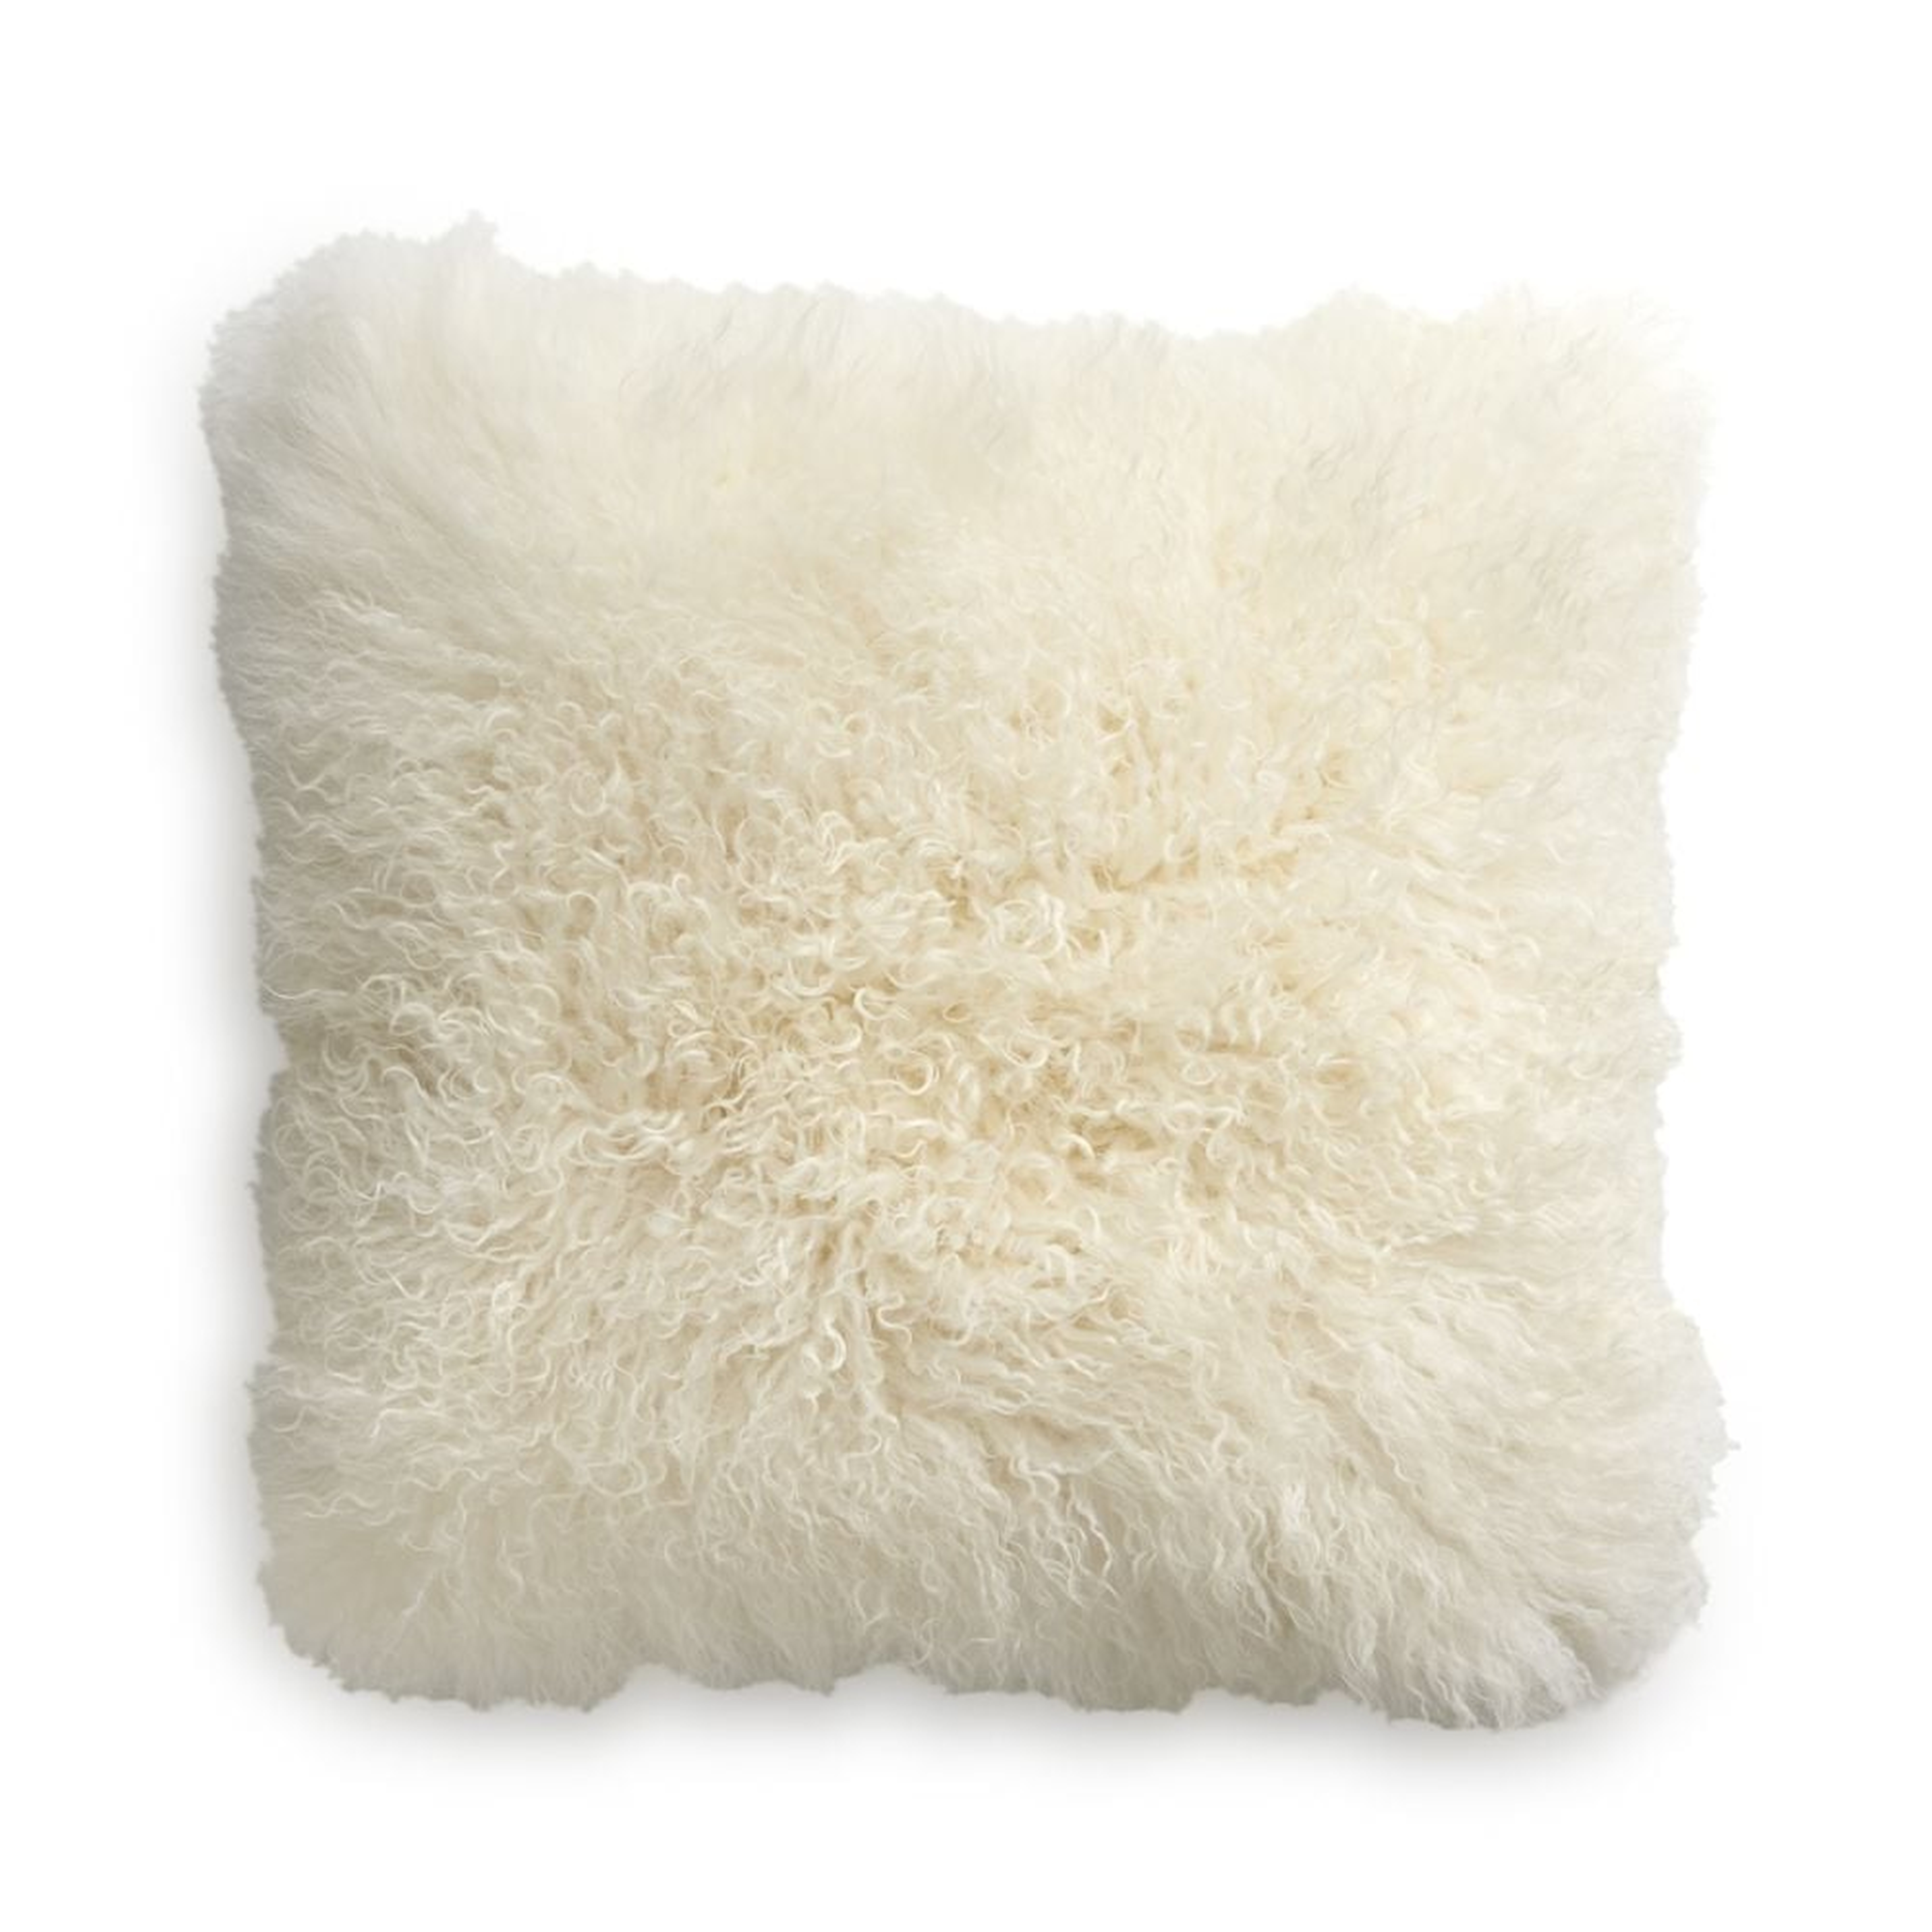 Pelliccia 23"x23" Ivory Mongolian Sheepskin Throw Pillow Cover - Crate and Barrel